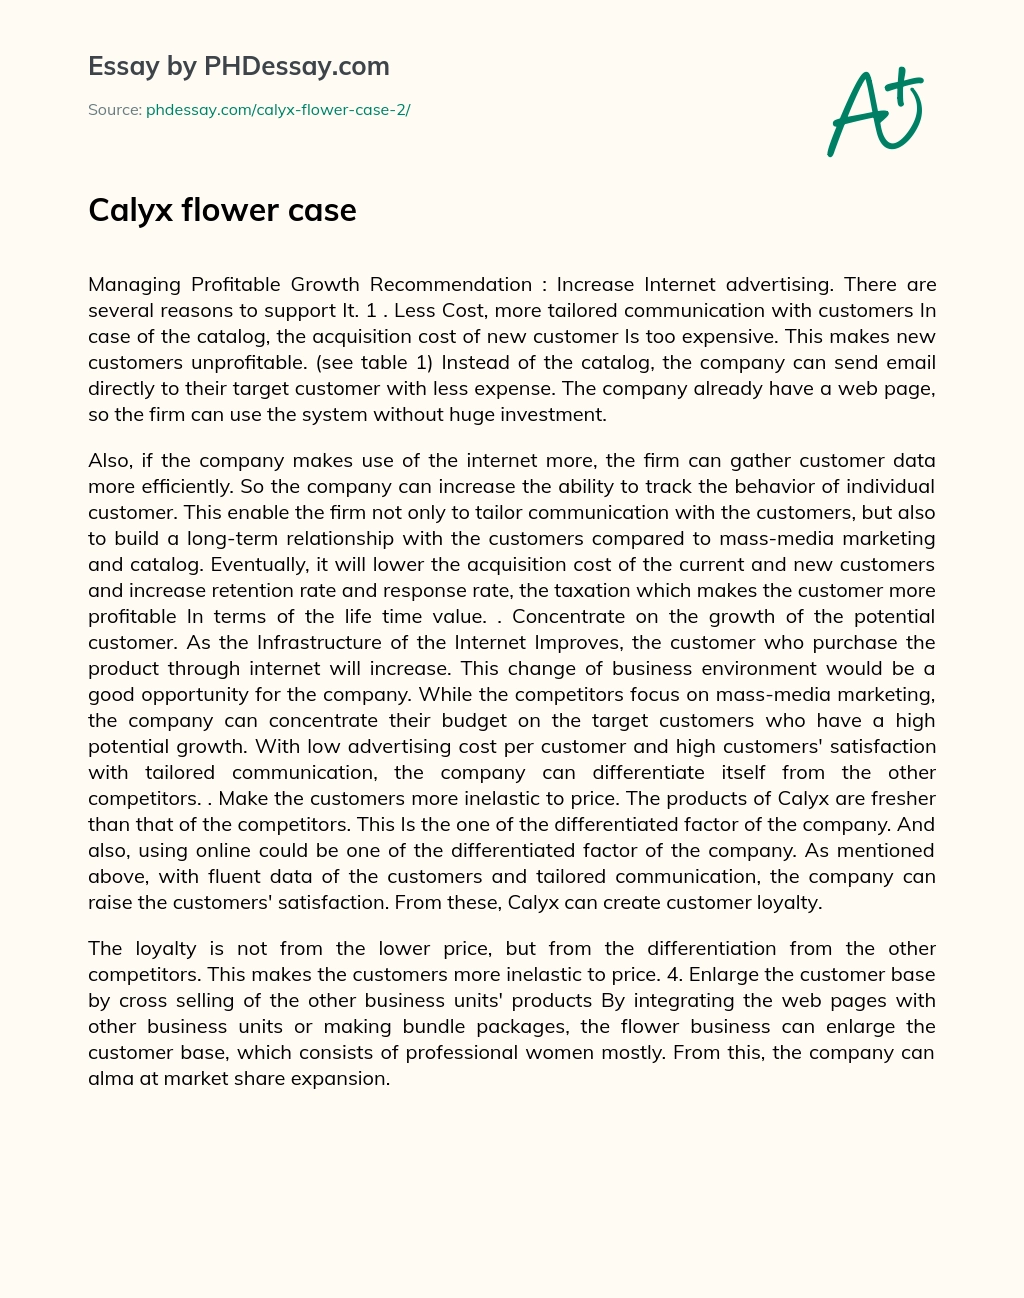 Calyx flower case essay